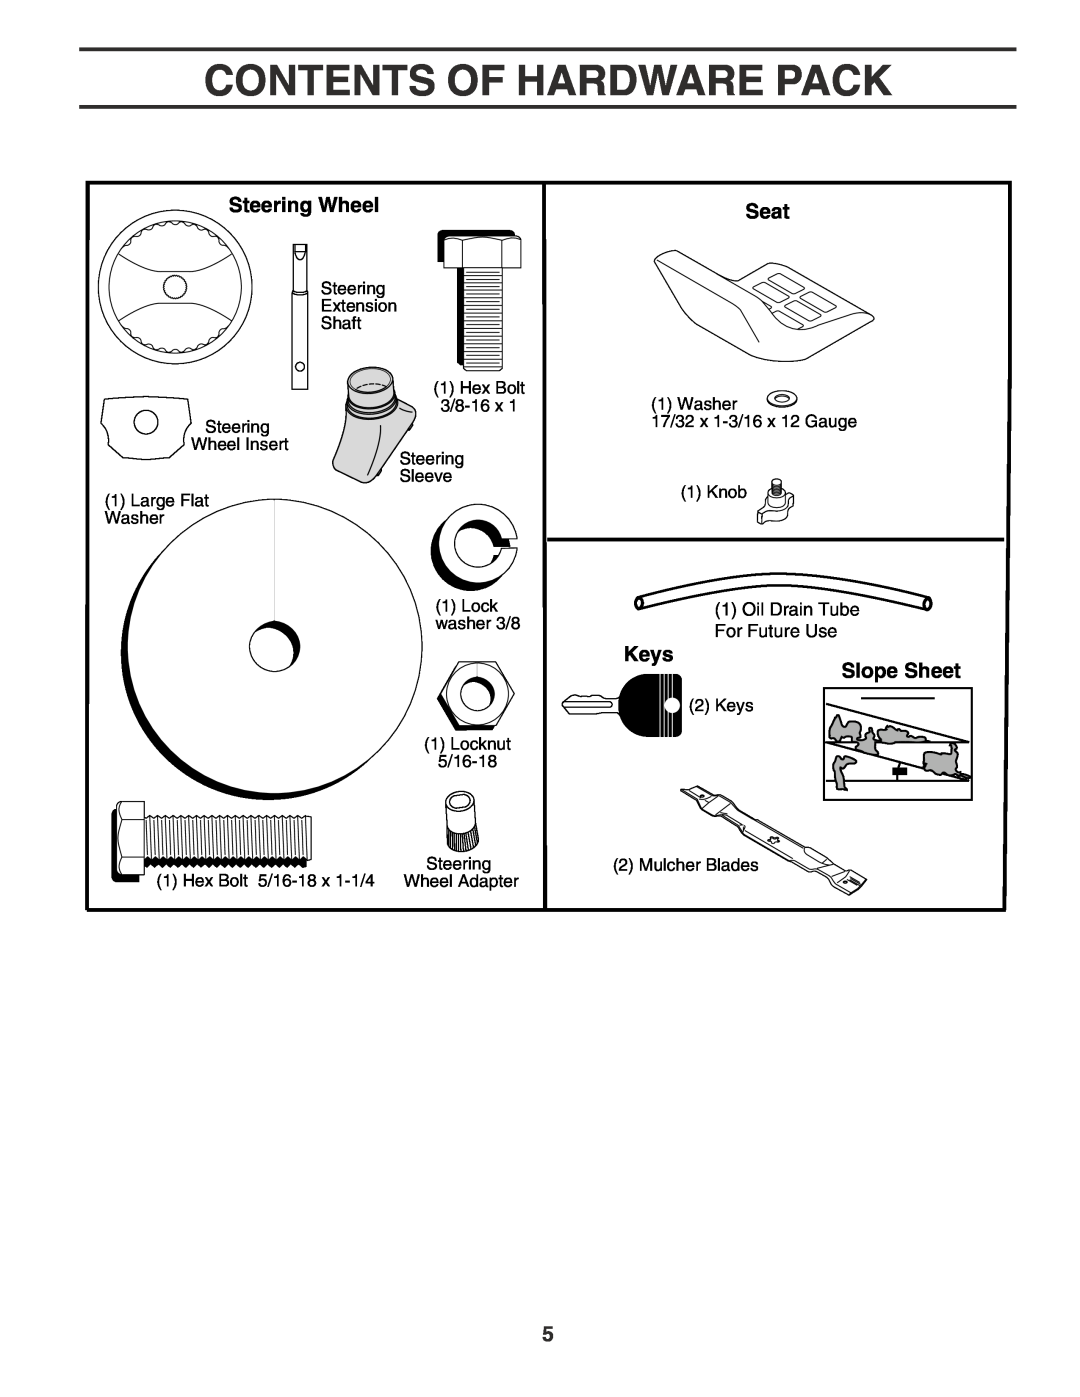 Poulan PR1842STA owner manual Contents Of Hardware Pack, Steering Wheel, Seat, Keys Slope Sheet, For Future Use 